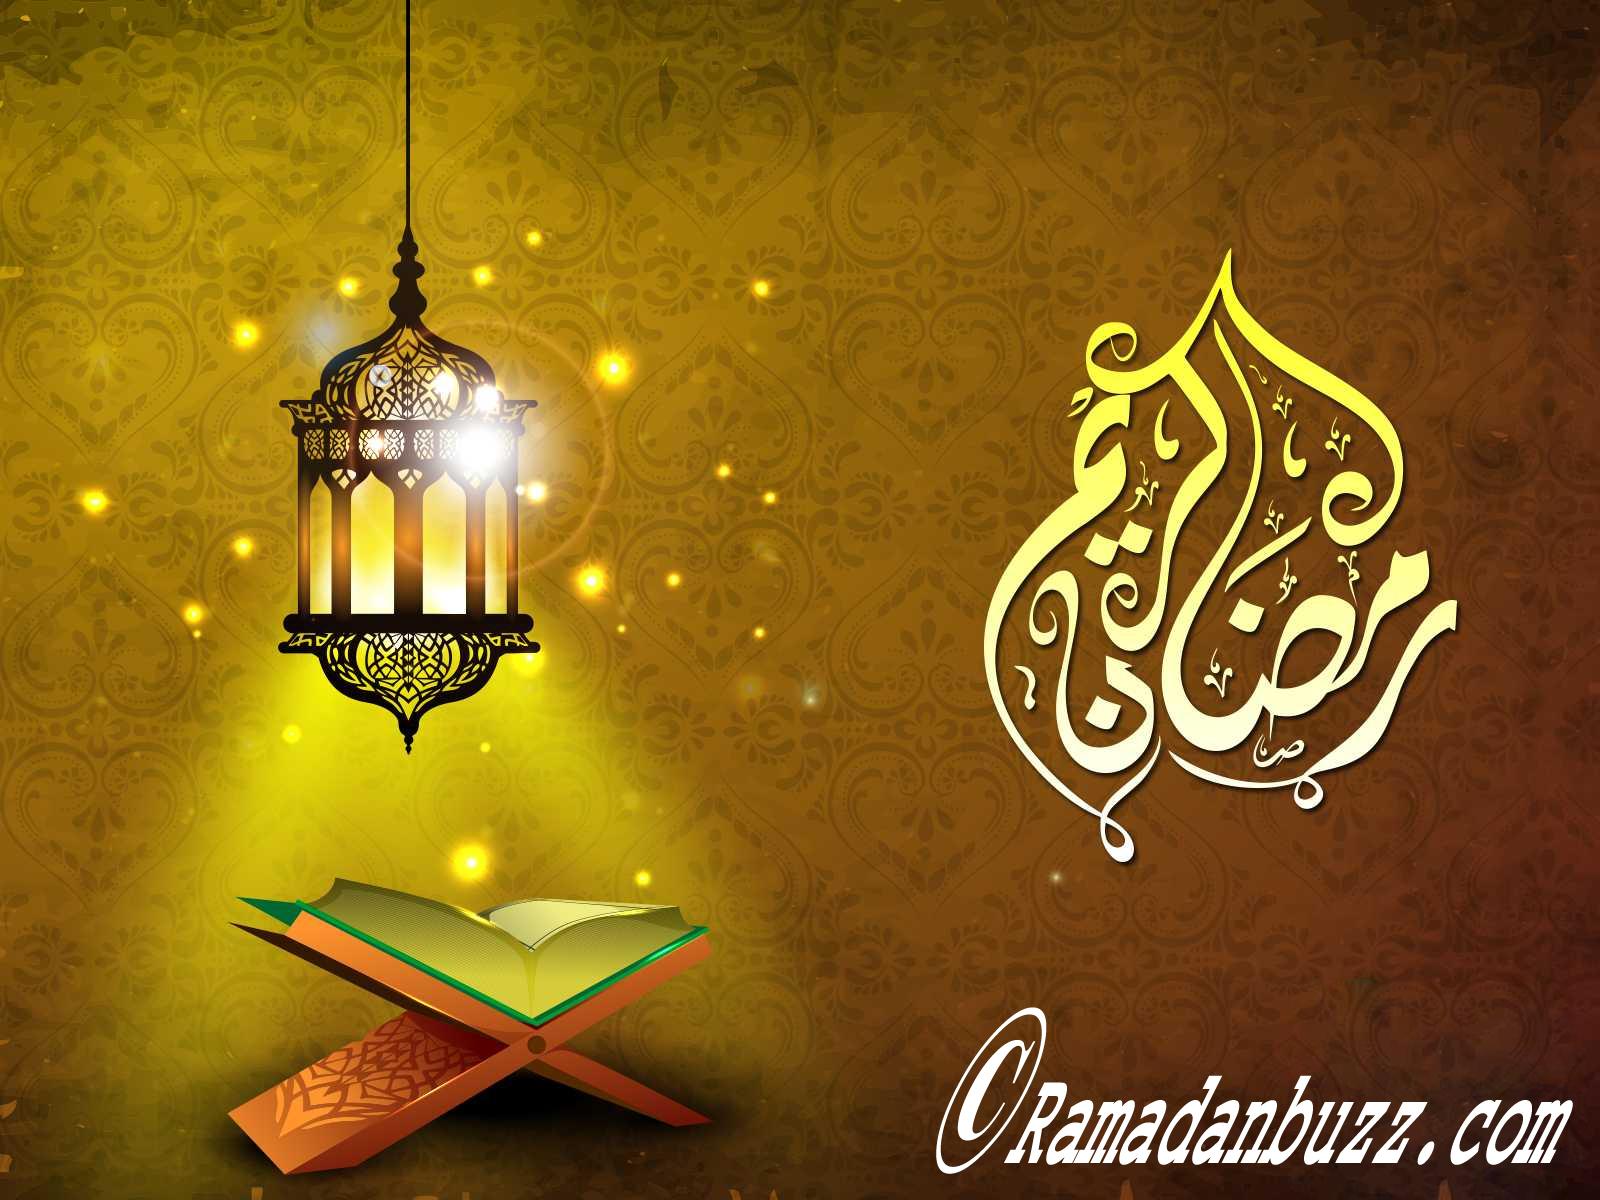 Ramadan Image Wallpaper HD, Ramzan image 2021